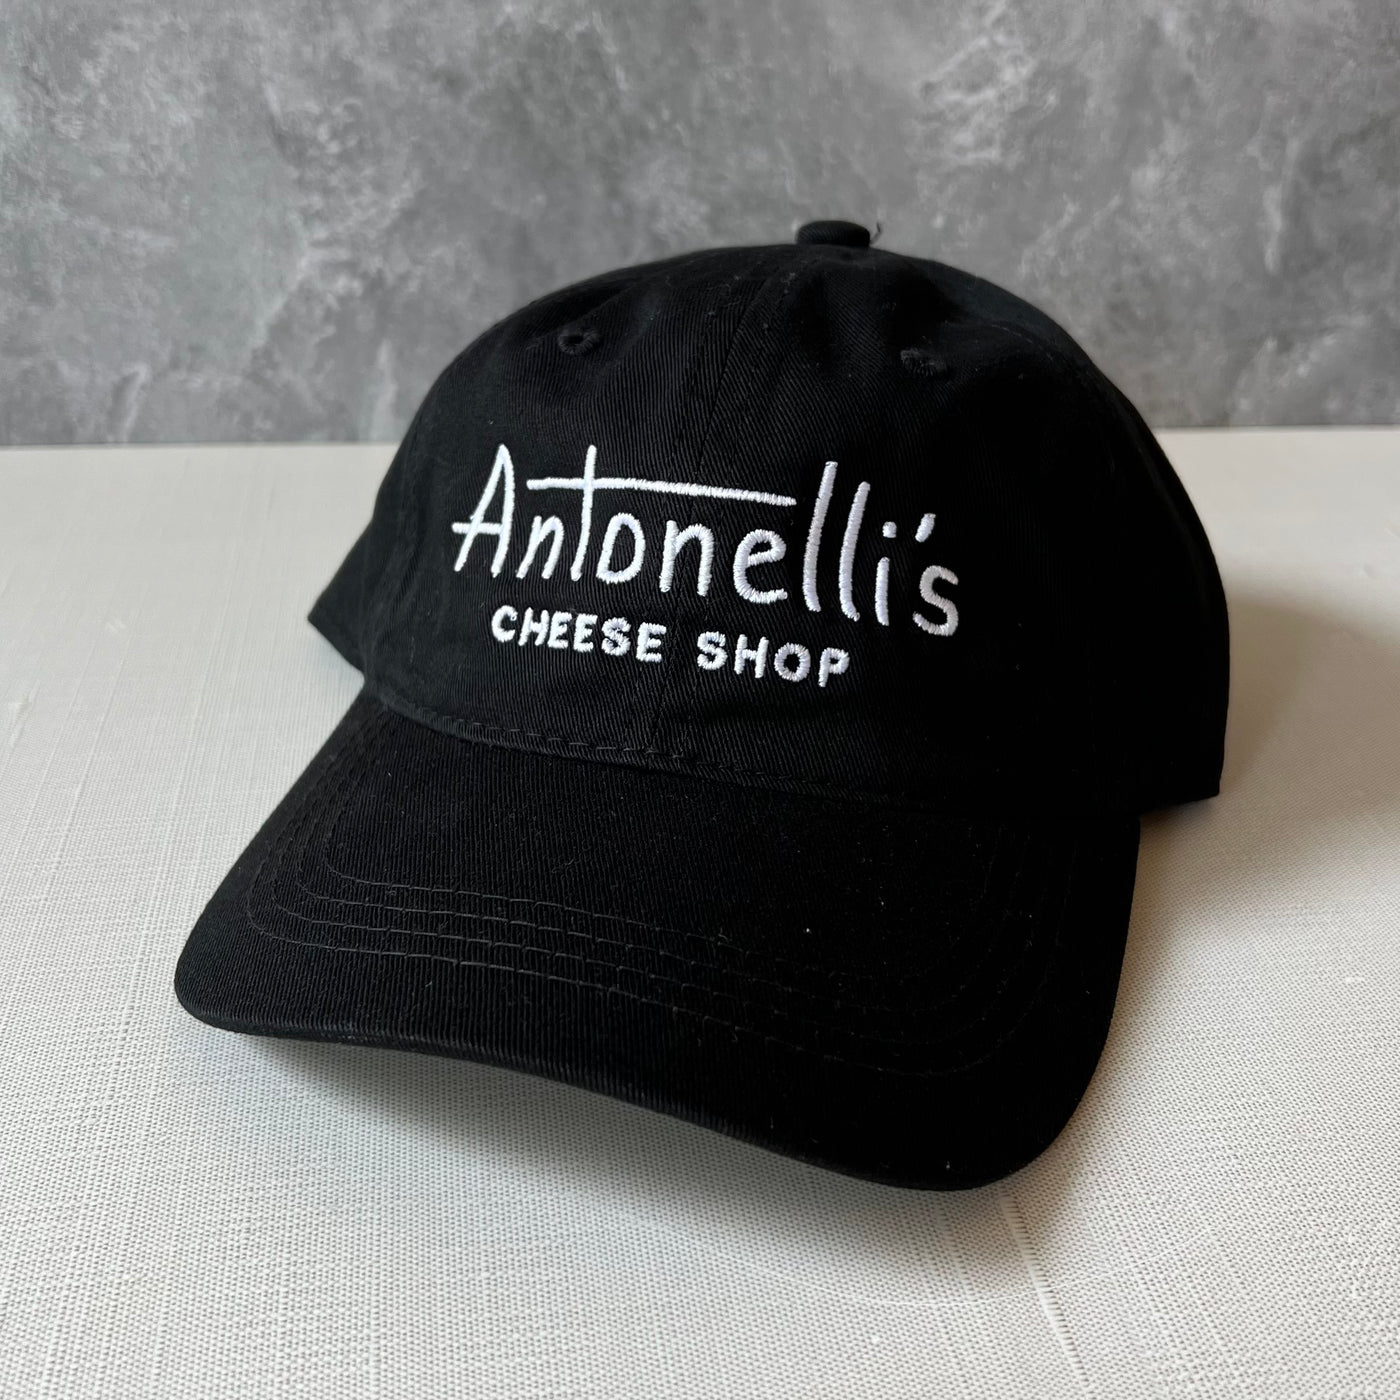 Black hat with "Antonelli's Cheese Shop" logo